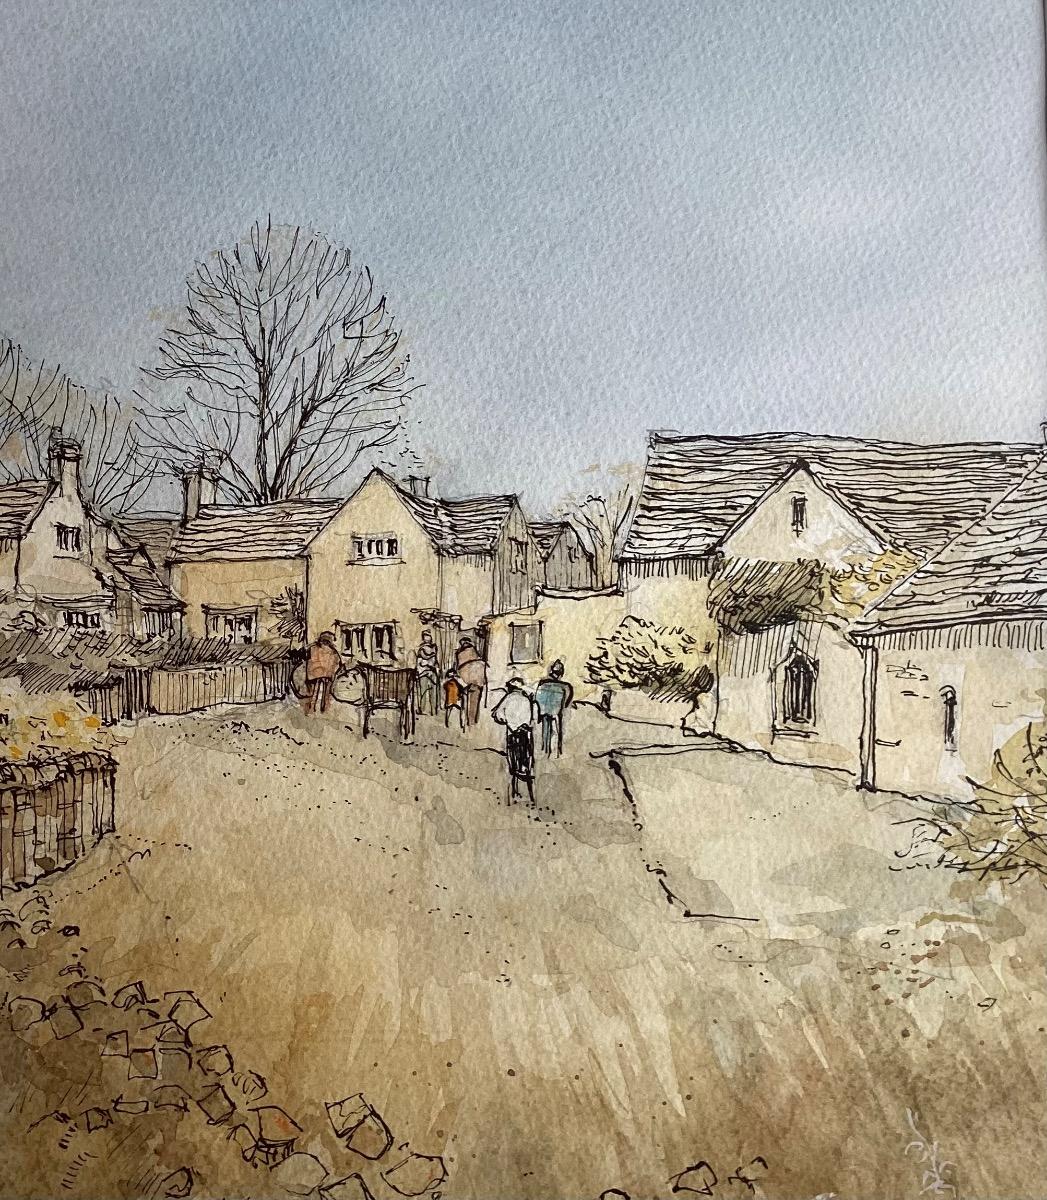 Elizabeth Chapman Landscape Painting - Cottages in Upper Slaughter, Original painting, cotswolds, Landscape